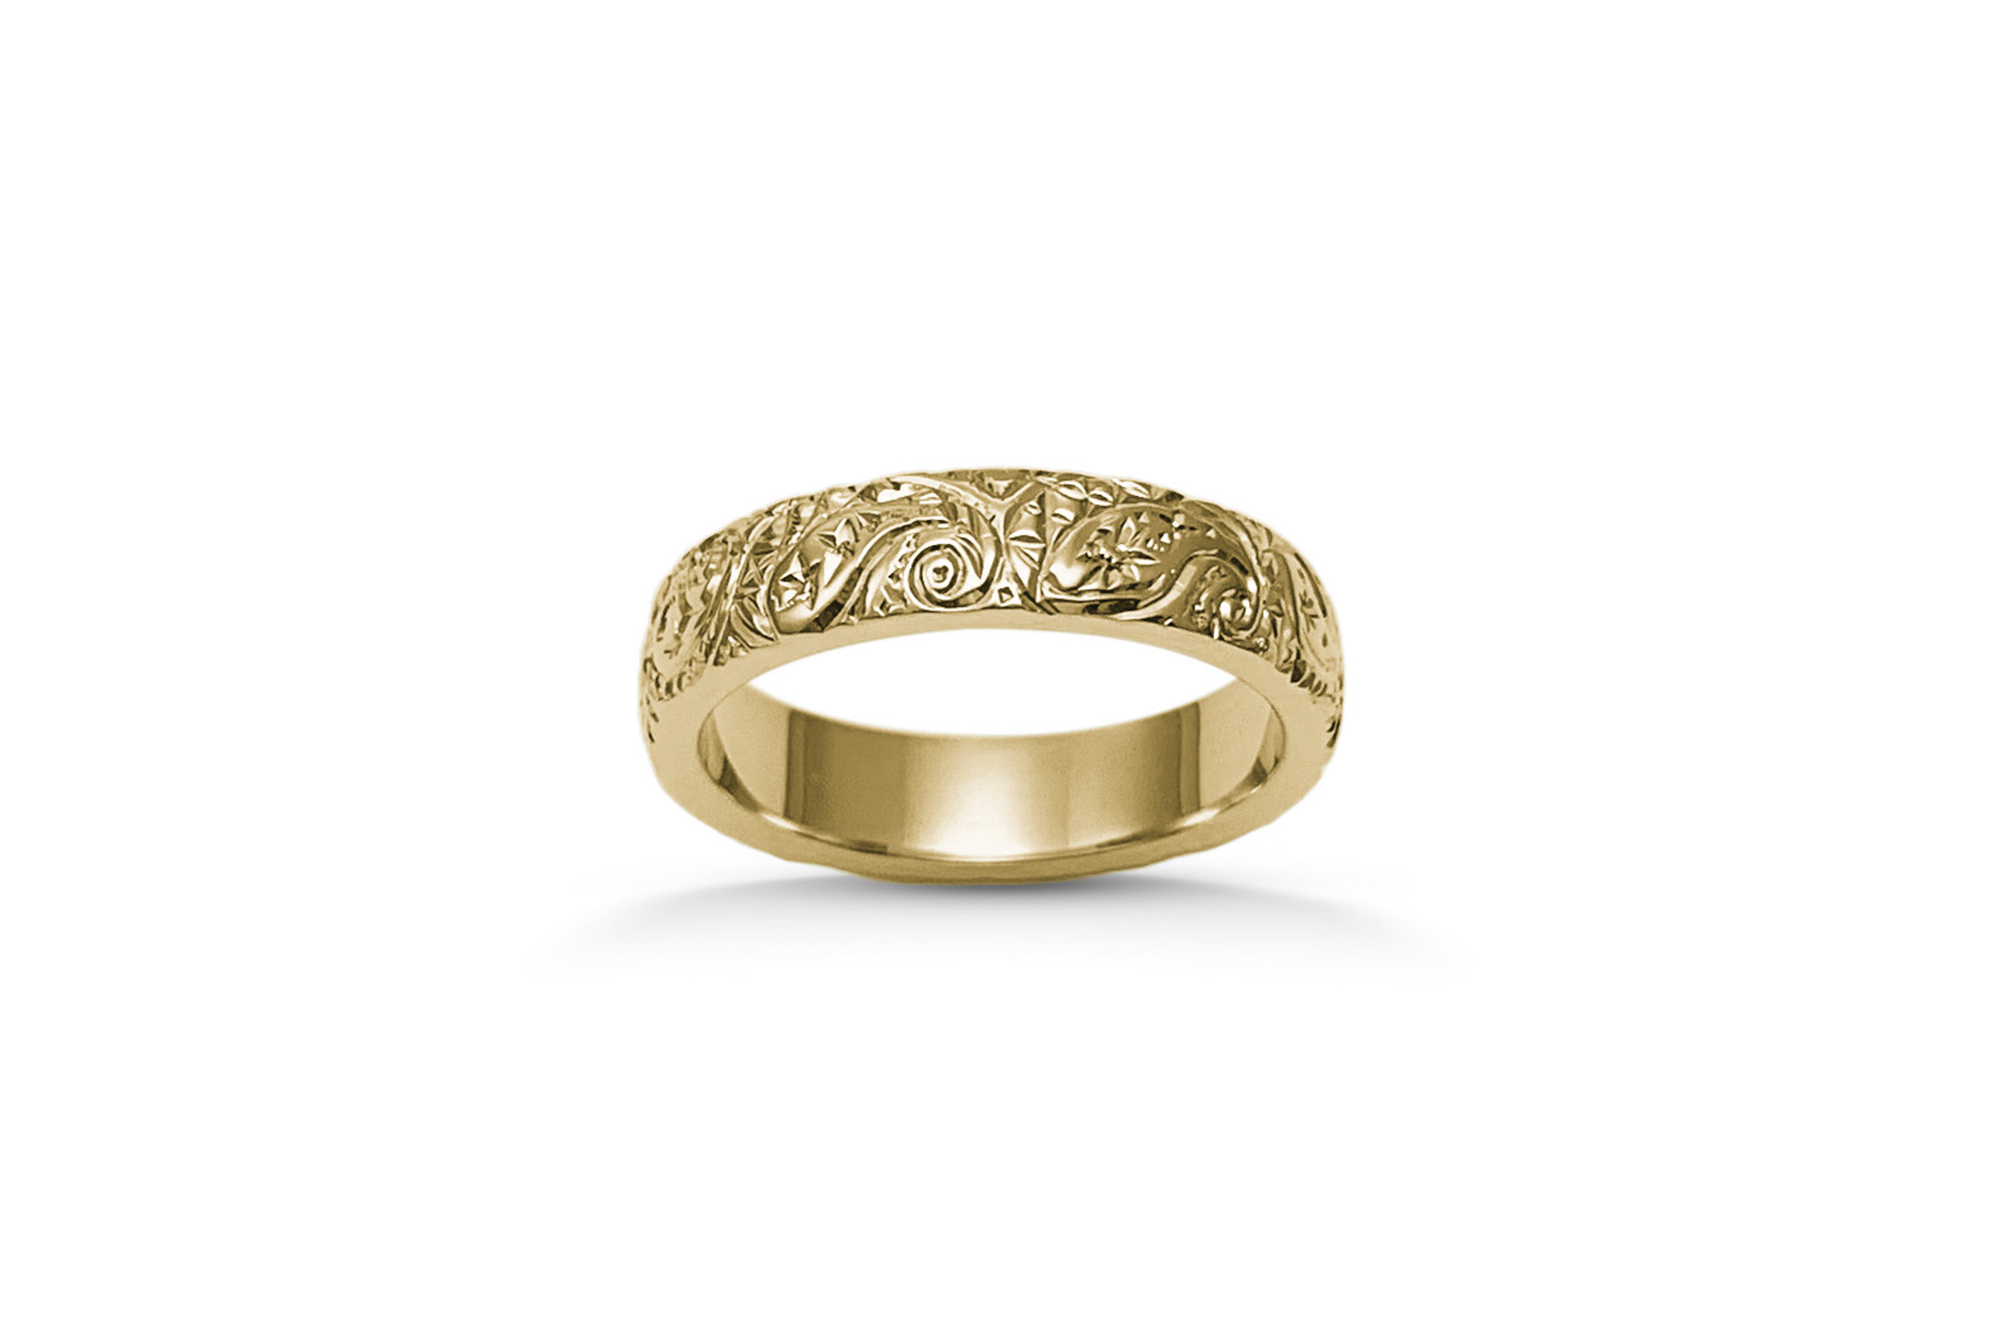 Joel Muller gold ring